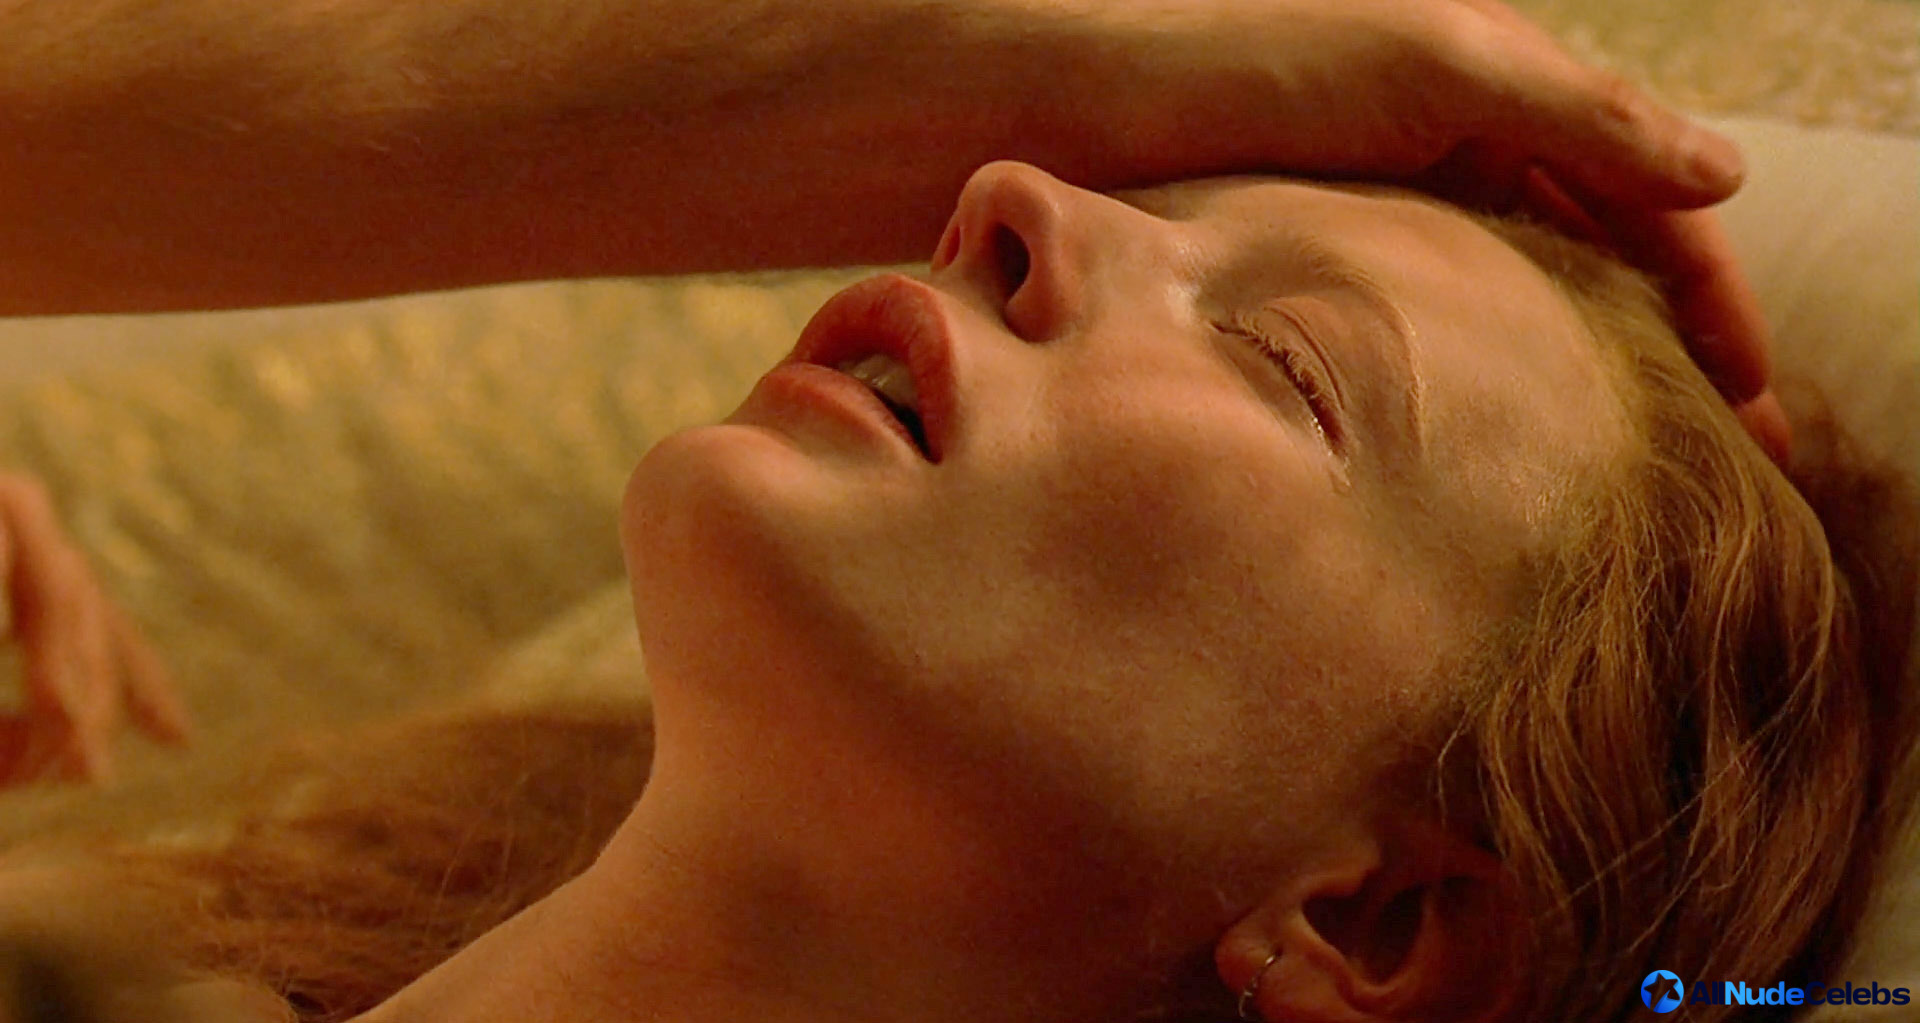 Cate Blanchett nude lesbian sex scenes.